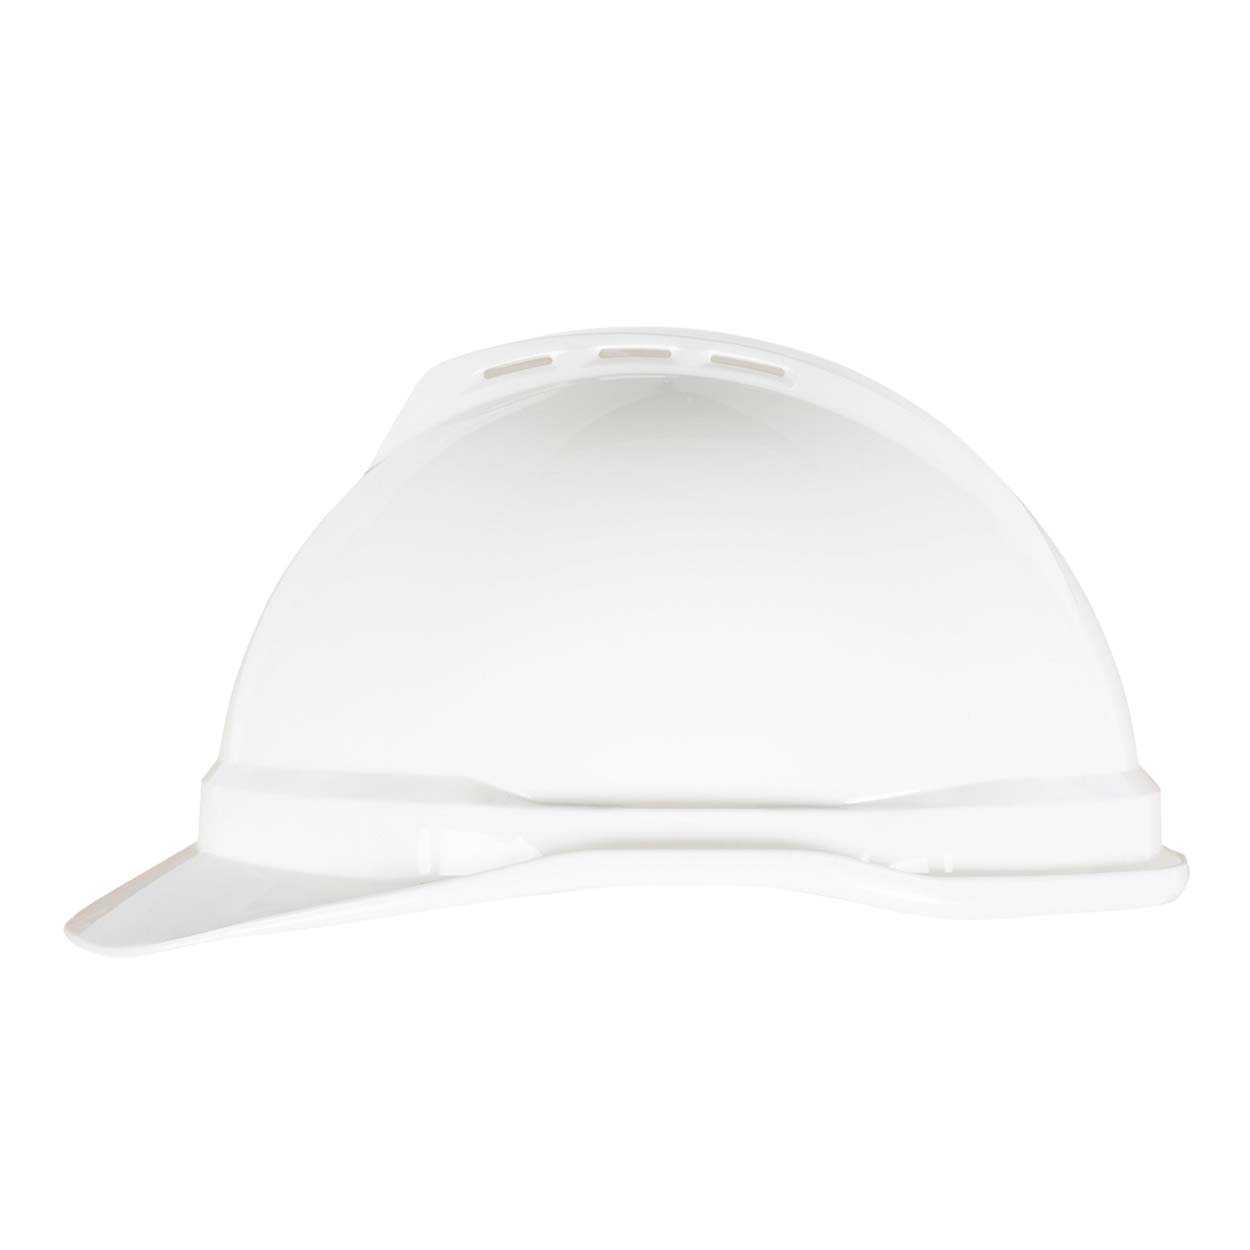 White MSA Hard Hat V-Gard 500 Cap 4-Point Fas-Trac III Ratchet Suspension Hardhats